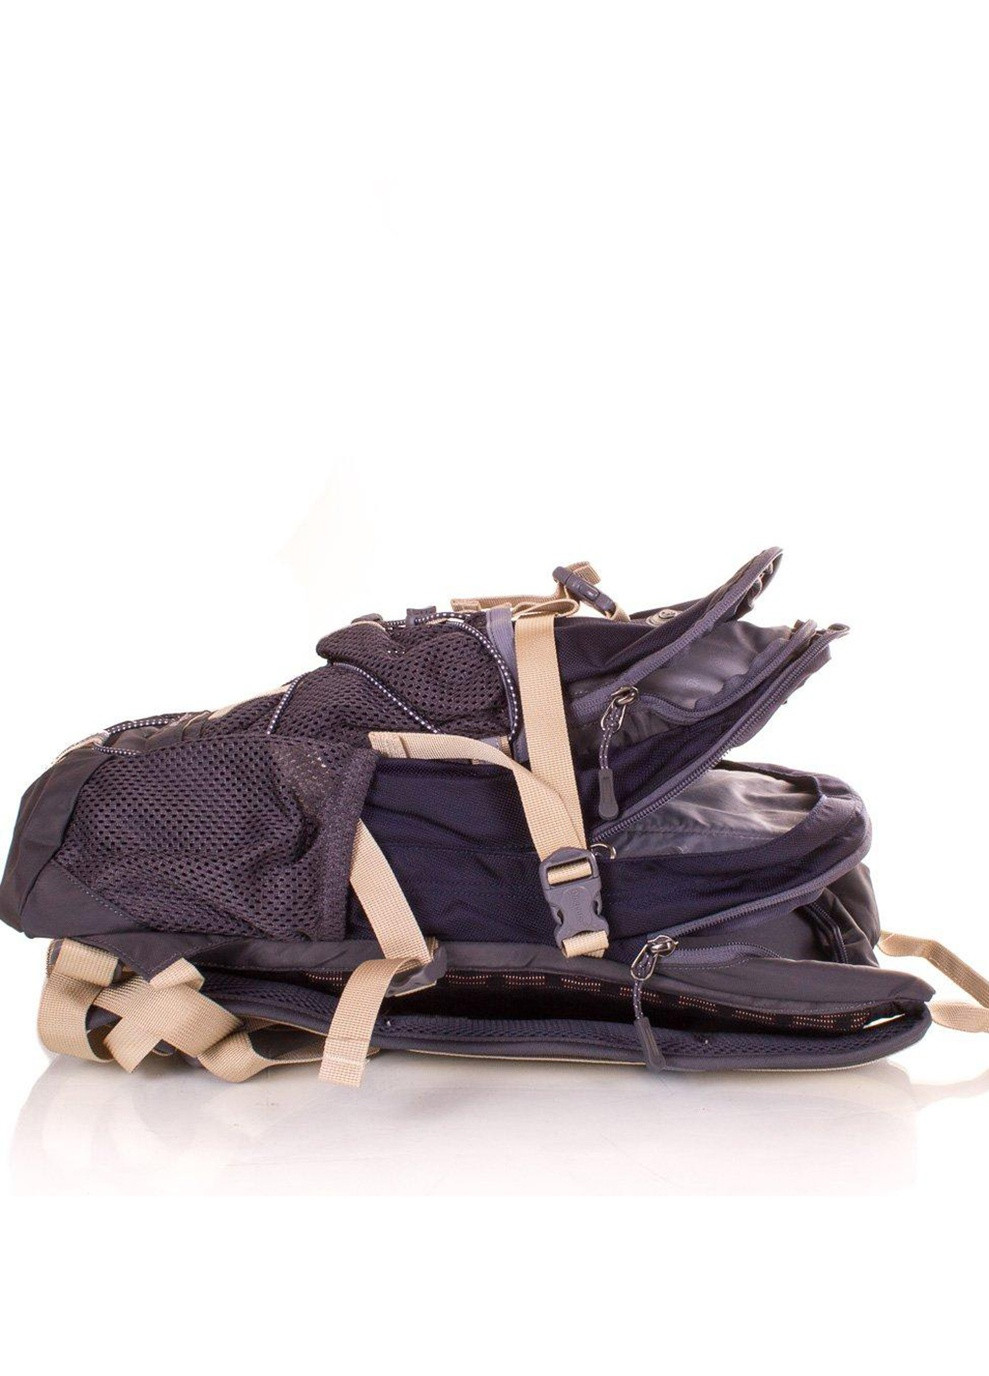 Мужской спортивный рюкзак 46х24х13 см Onepolar (250097142)